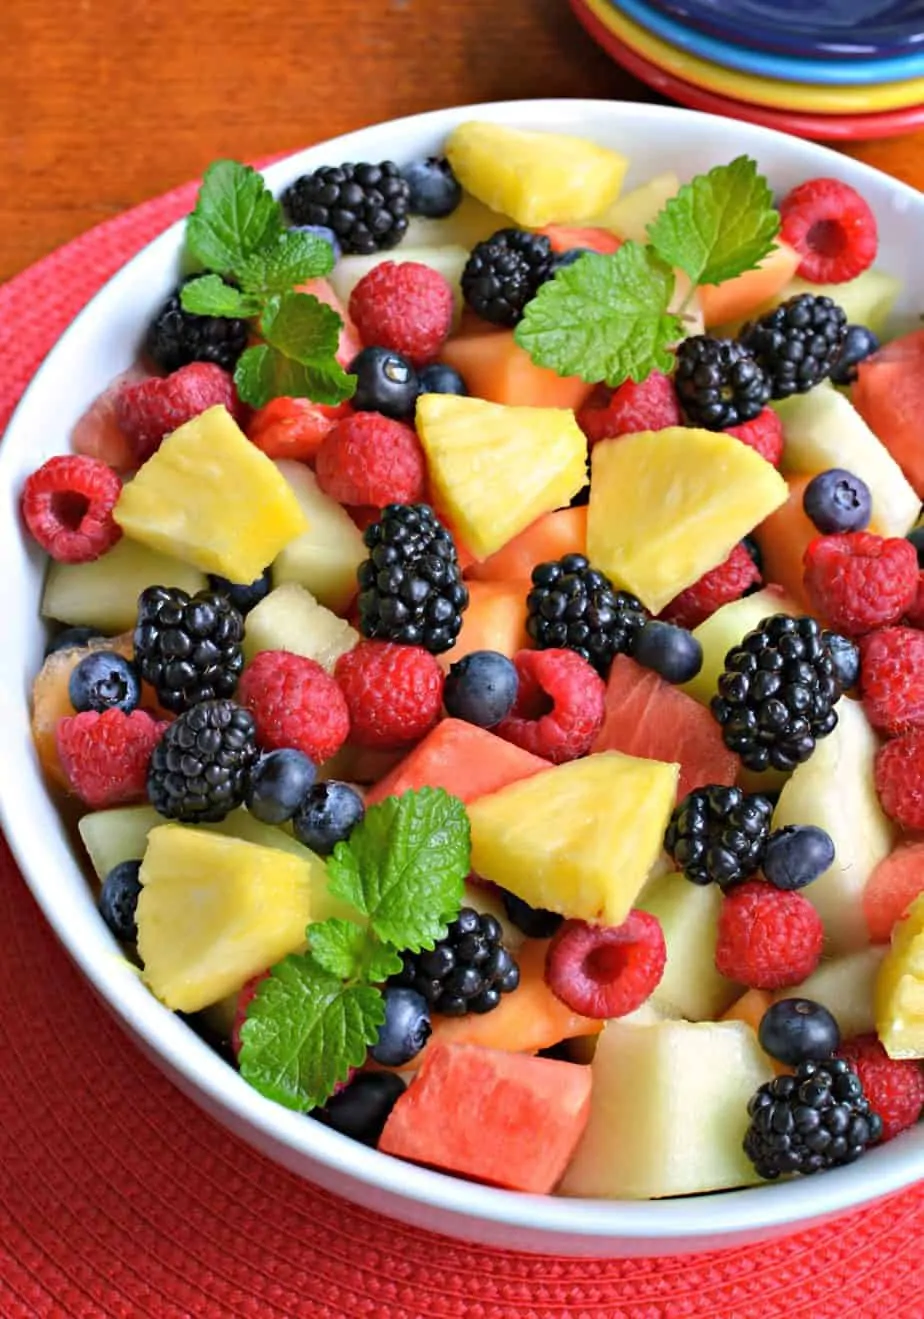 This Summer Fruit Salad combines cantaloupe, honey dew, watermelon, pineapple, raspberries, blueberries and blackberries. 